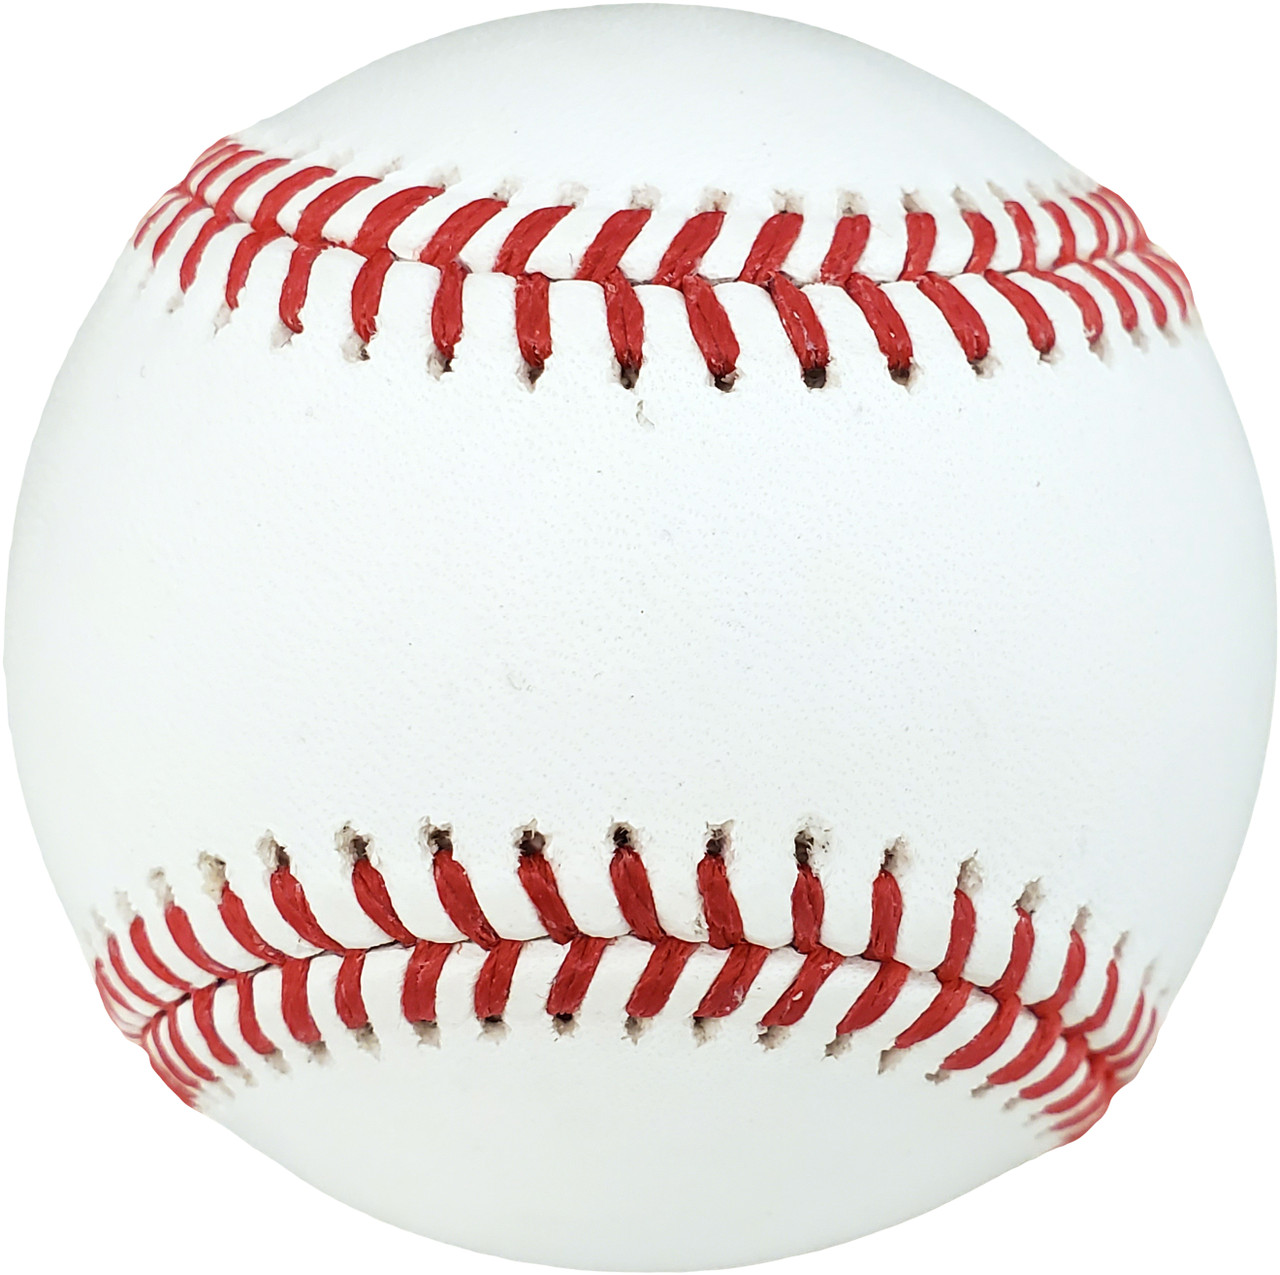 Yan Gomes Autographed Official 2019 World Series MLB Baseball Washington  Nationals PSA/DNA Stock #179016 - Mill Creek Sports